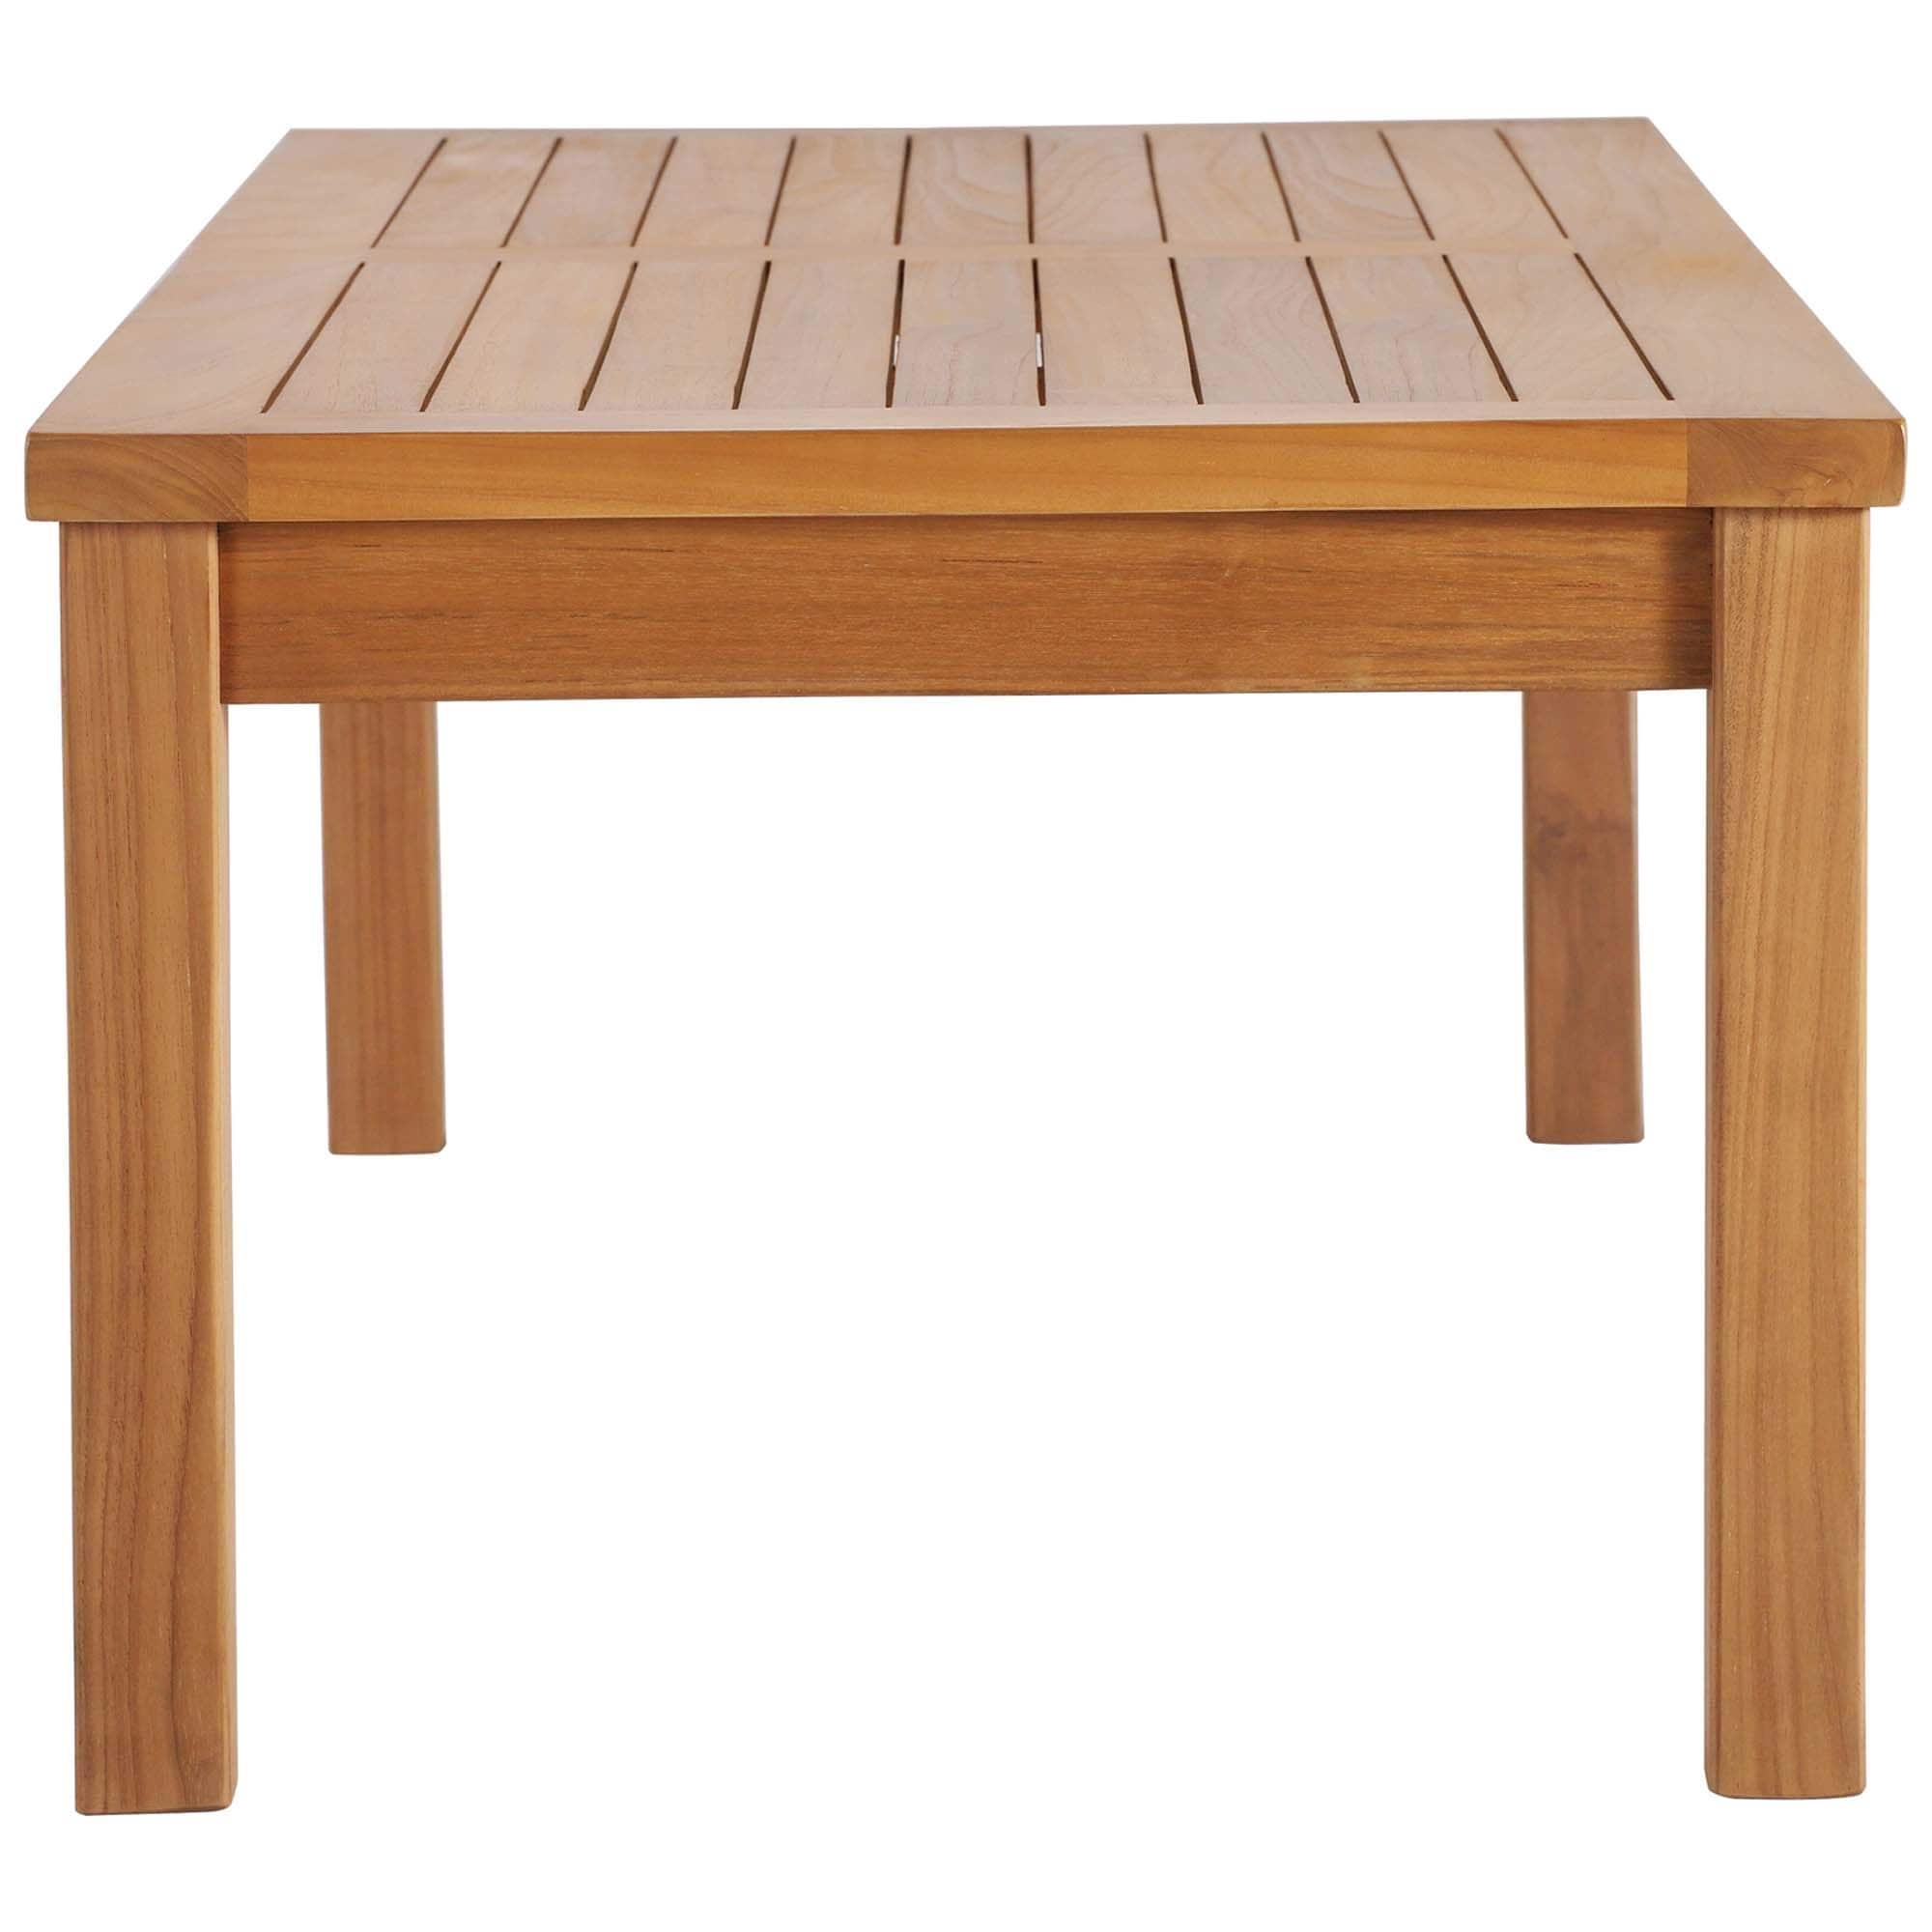 Upland Outdoor Patio Teak Wood 4-Piece Furniture Set